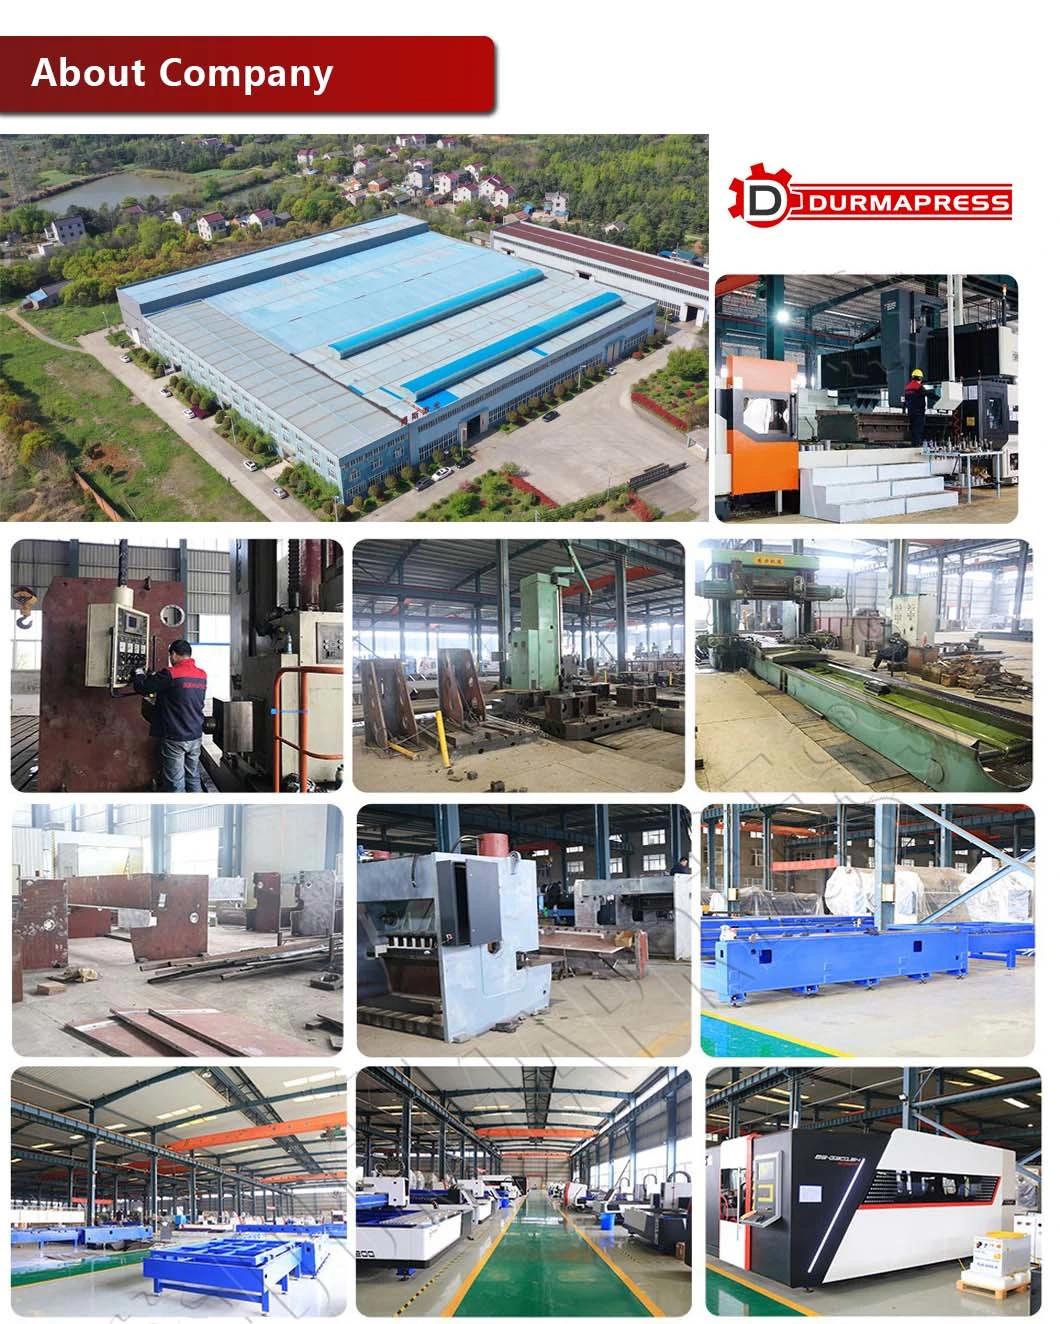 Mini CNC Ipg Fiber Laser Cutting Machine Equipment 1000W for Iron Tube with Good Price in China Durmapress Company